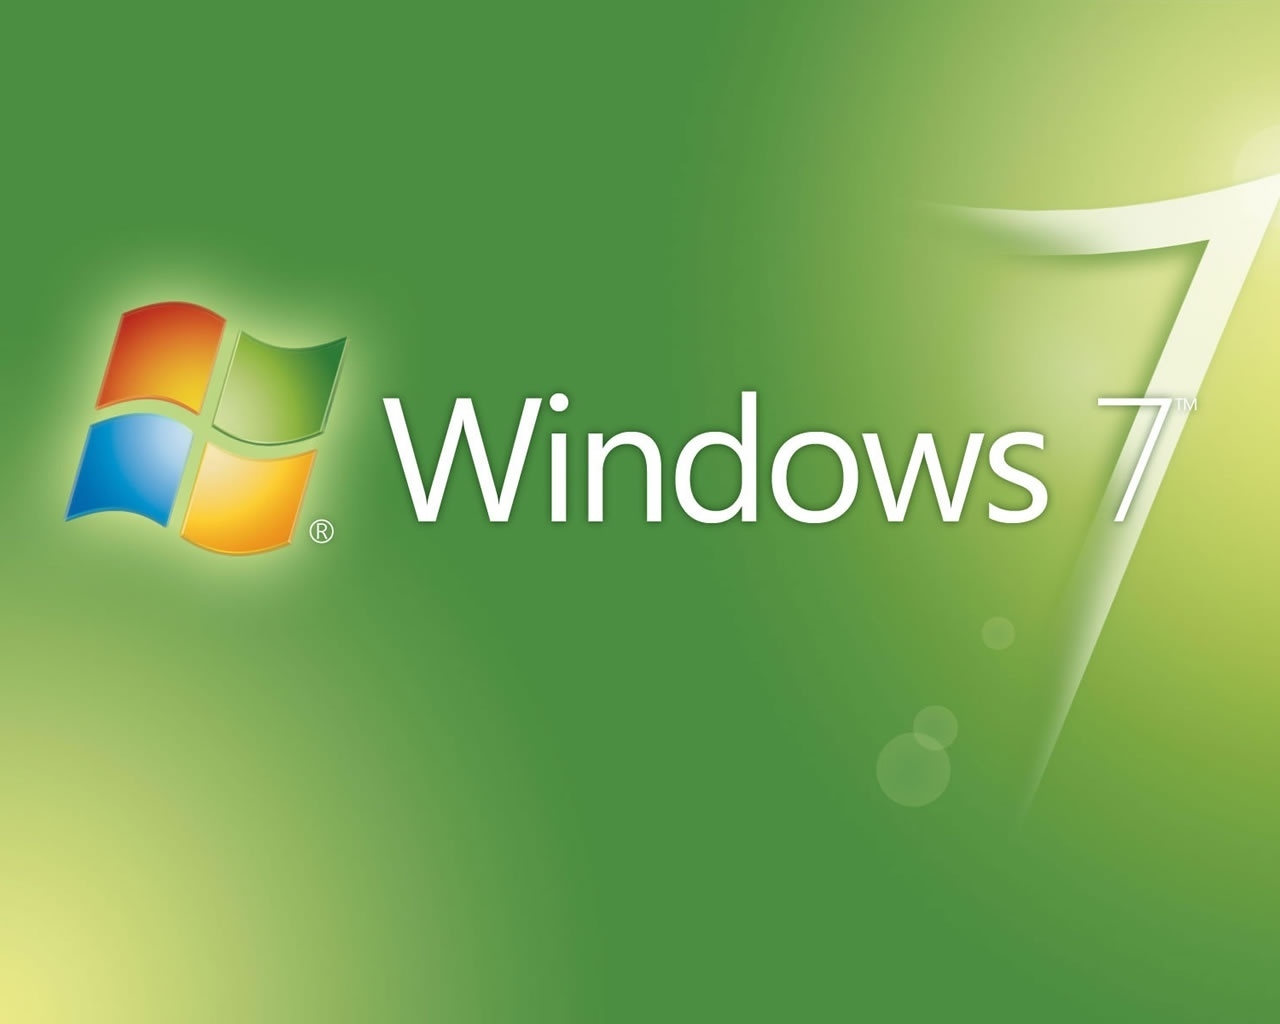 Windows 7 Green for 1280 x 1024 resolution